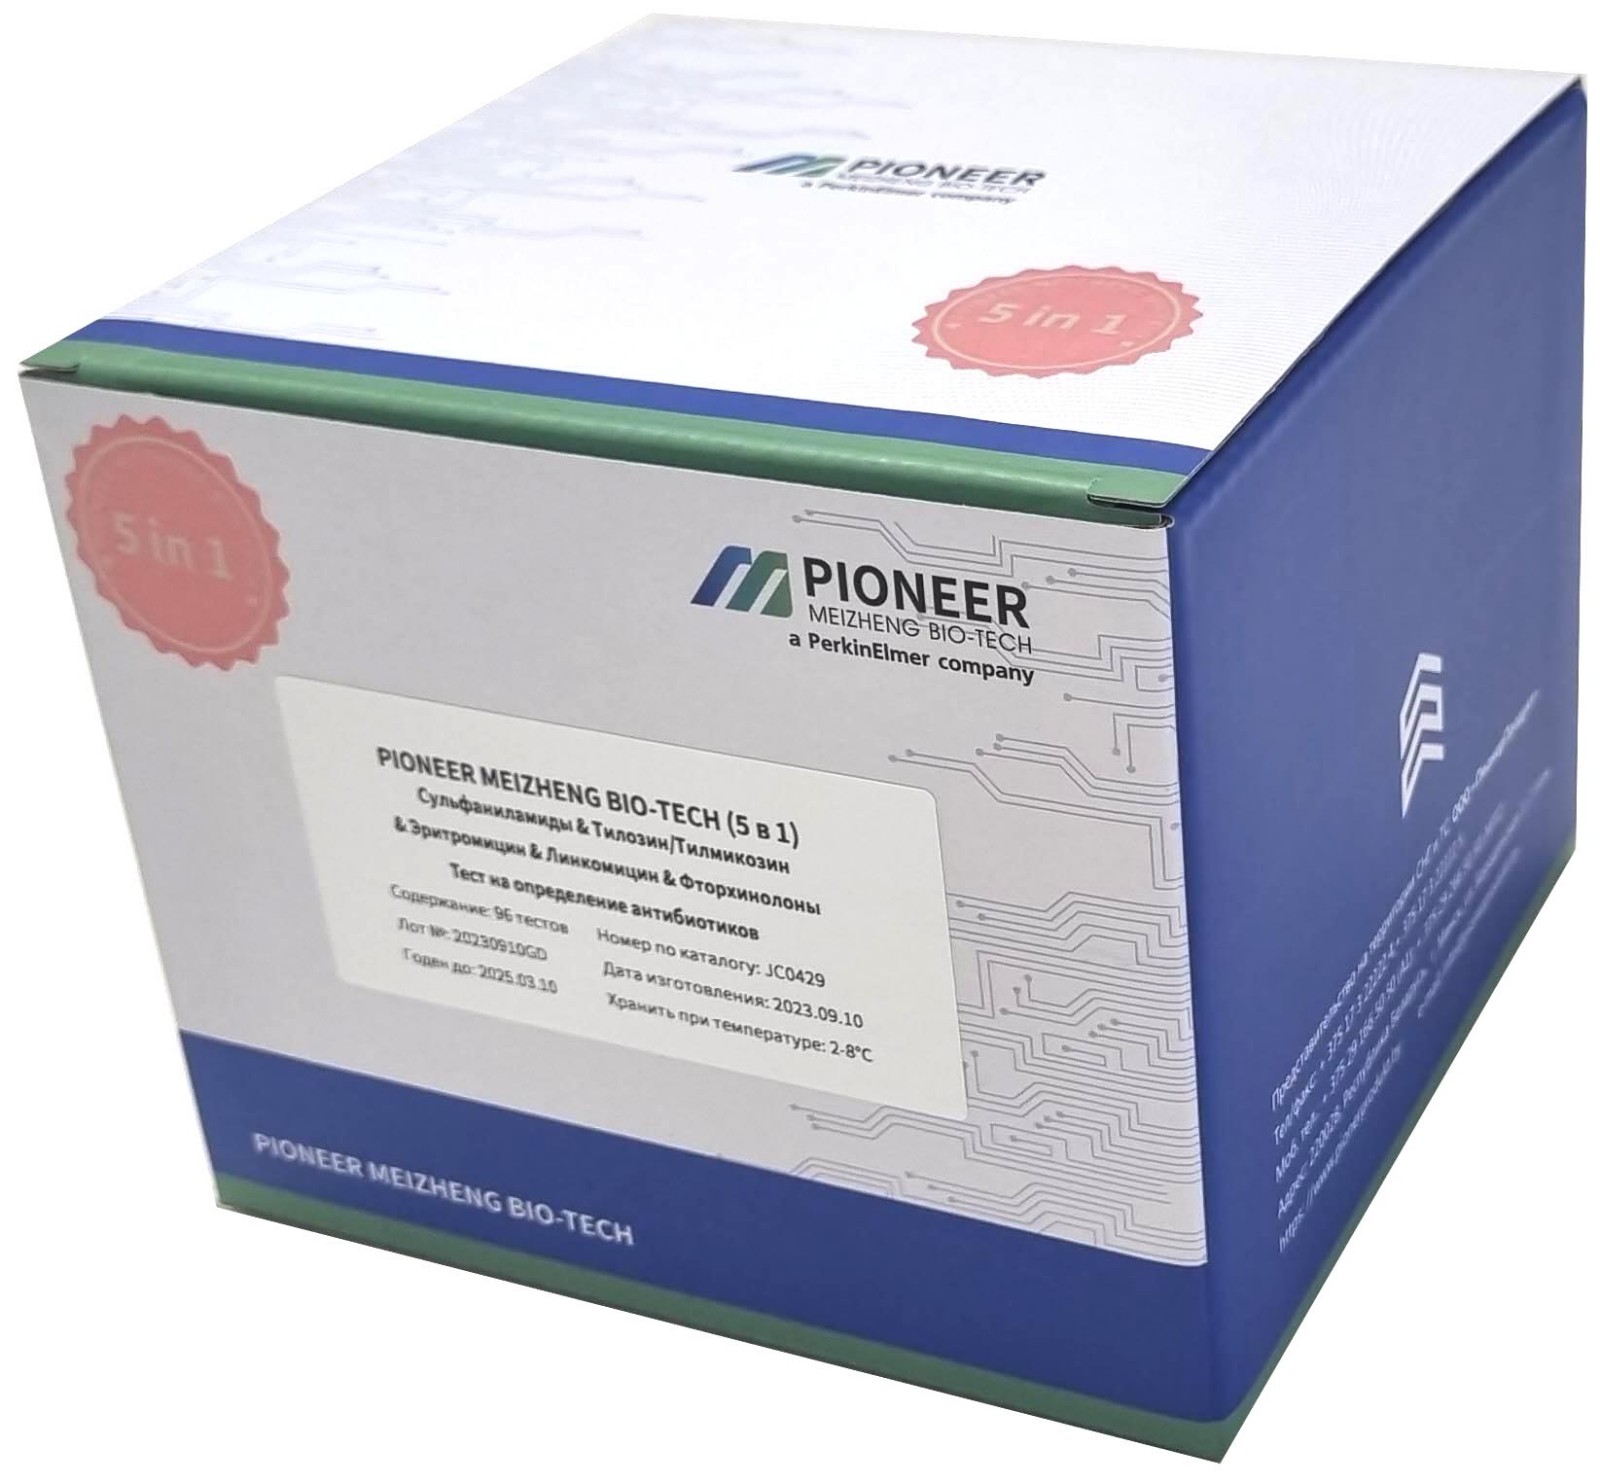 Rapid tests PIONER 5 in 1 for the determination of sulfonamides, tylosin, tilmicosin, lincomycin, erythromycin, fluoroquinolones